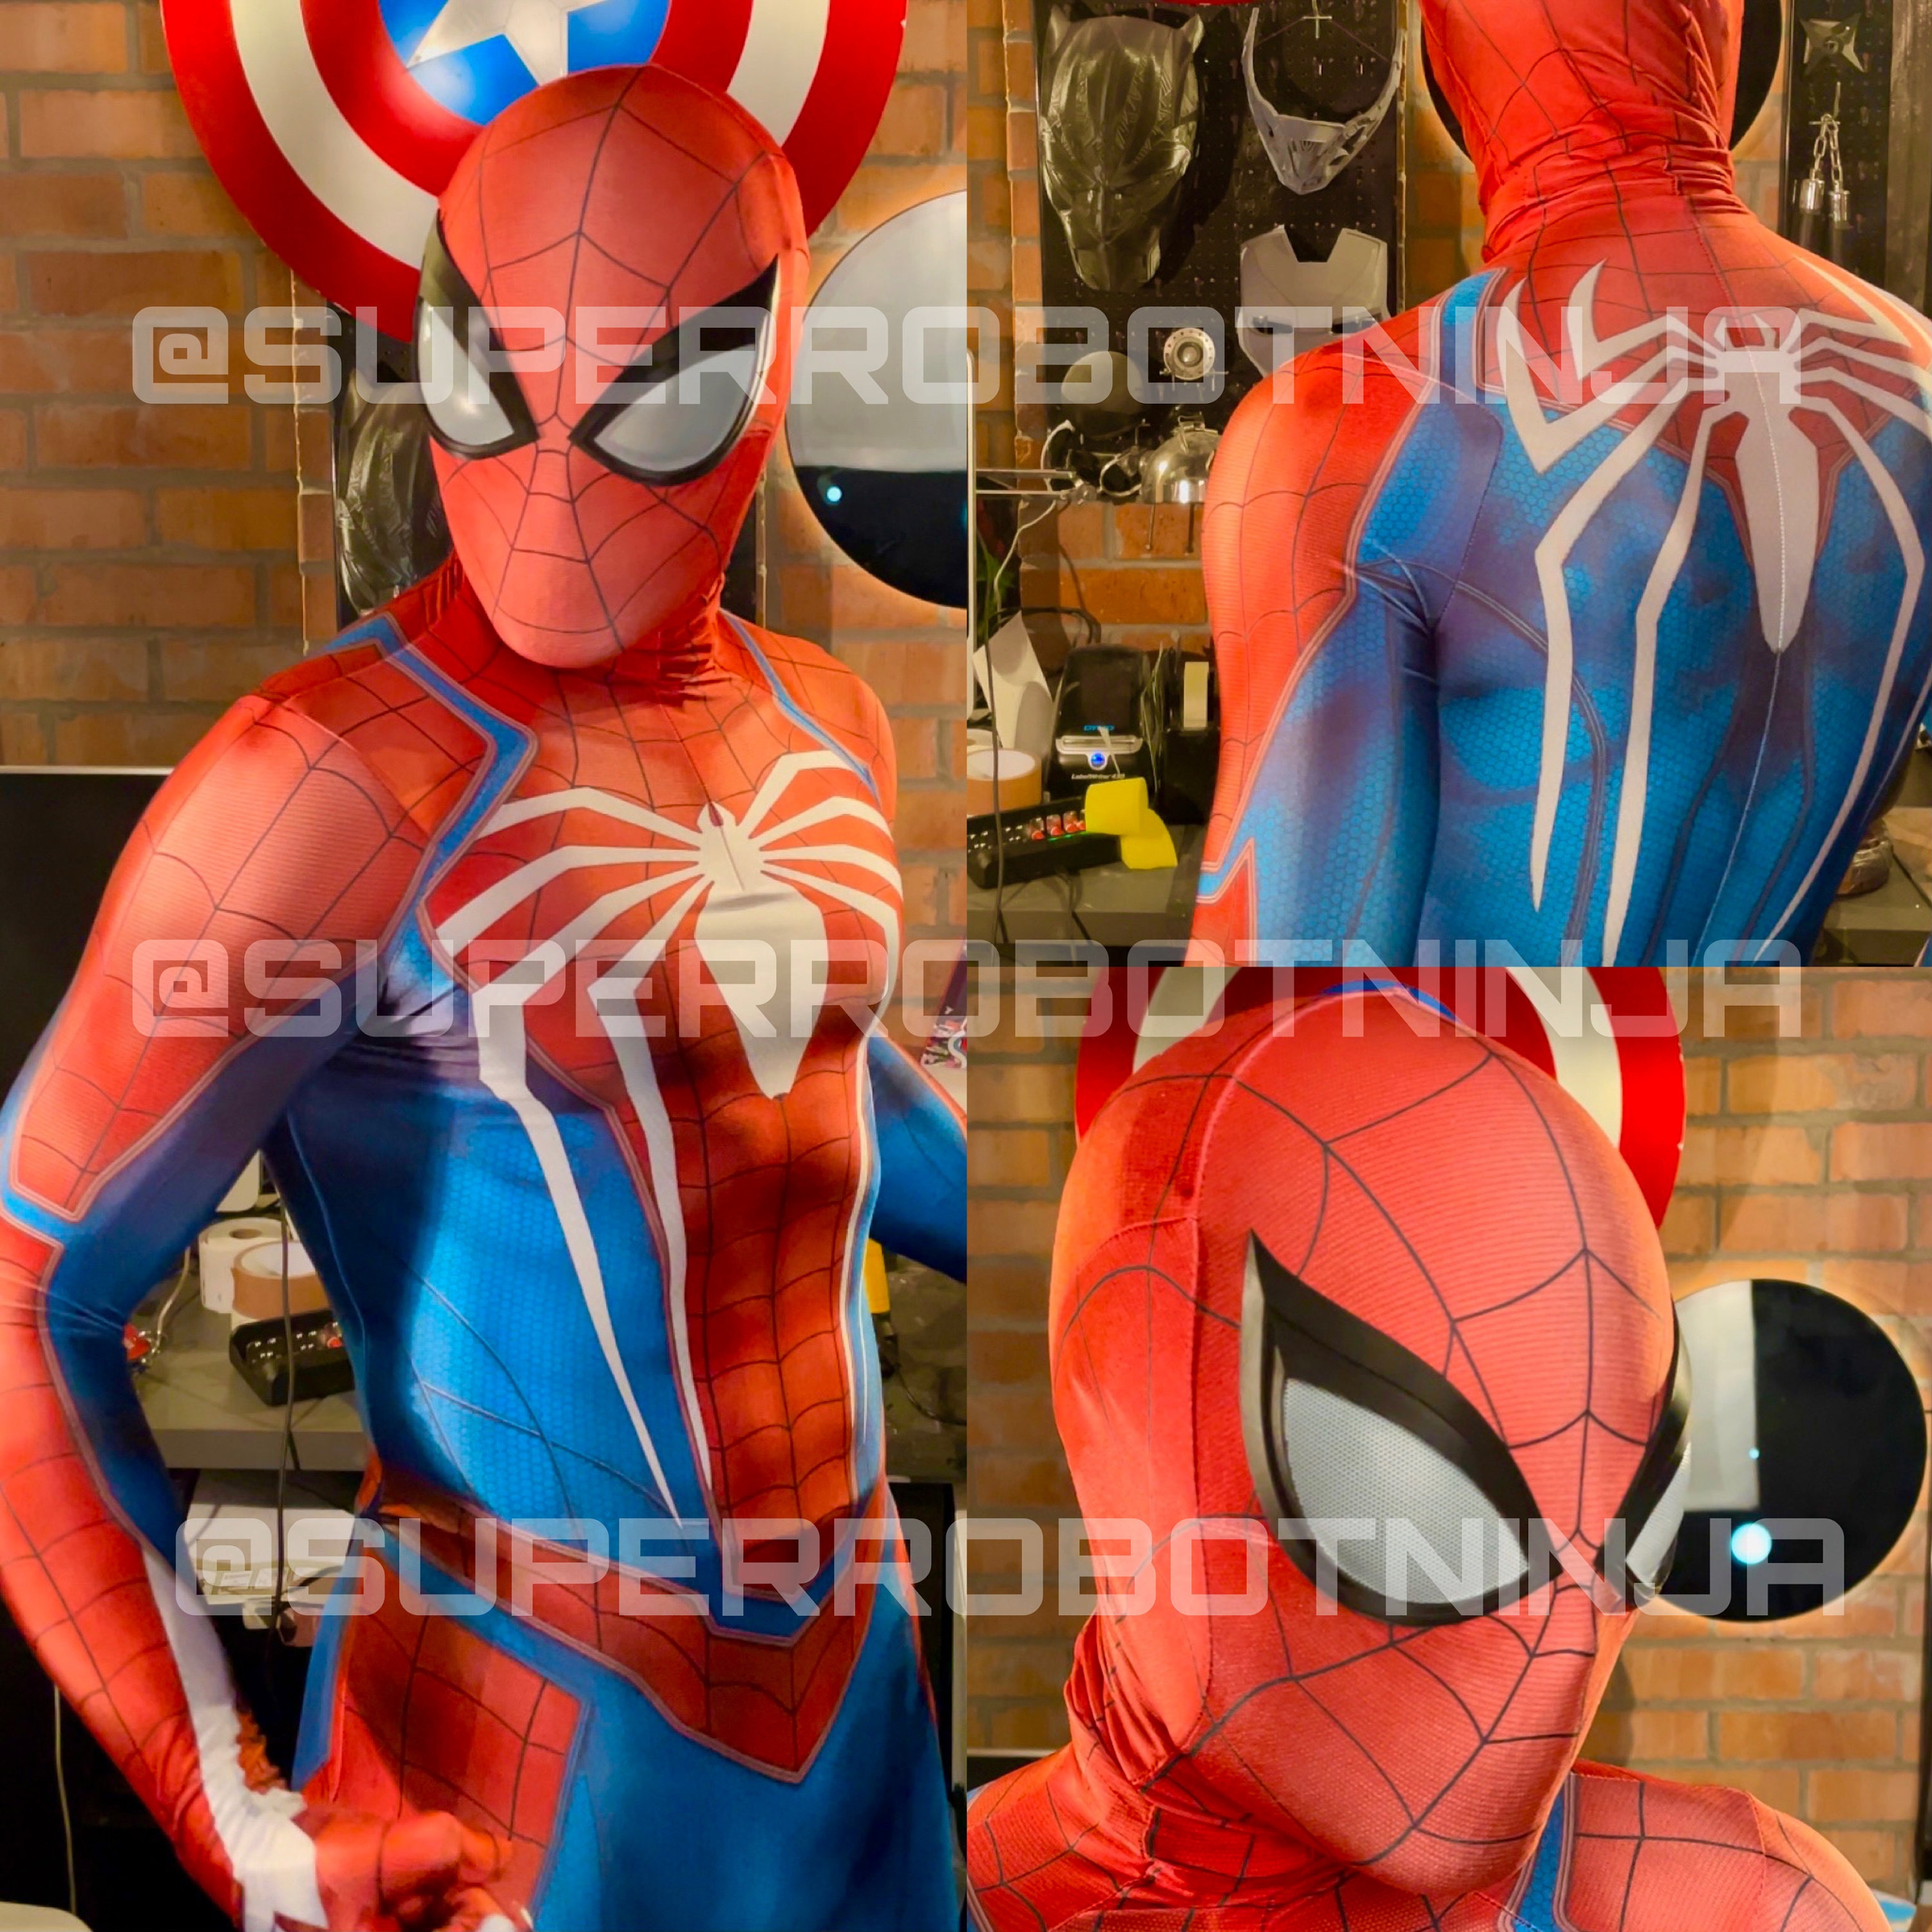 Spider-man Suit Insomniac PS4 bright - Etsy